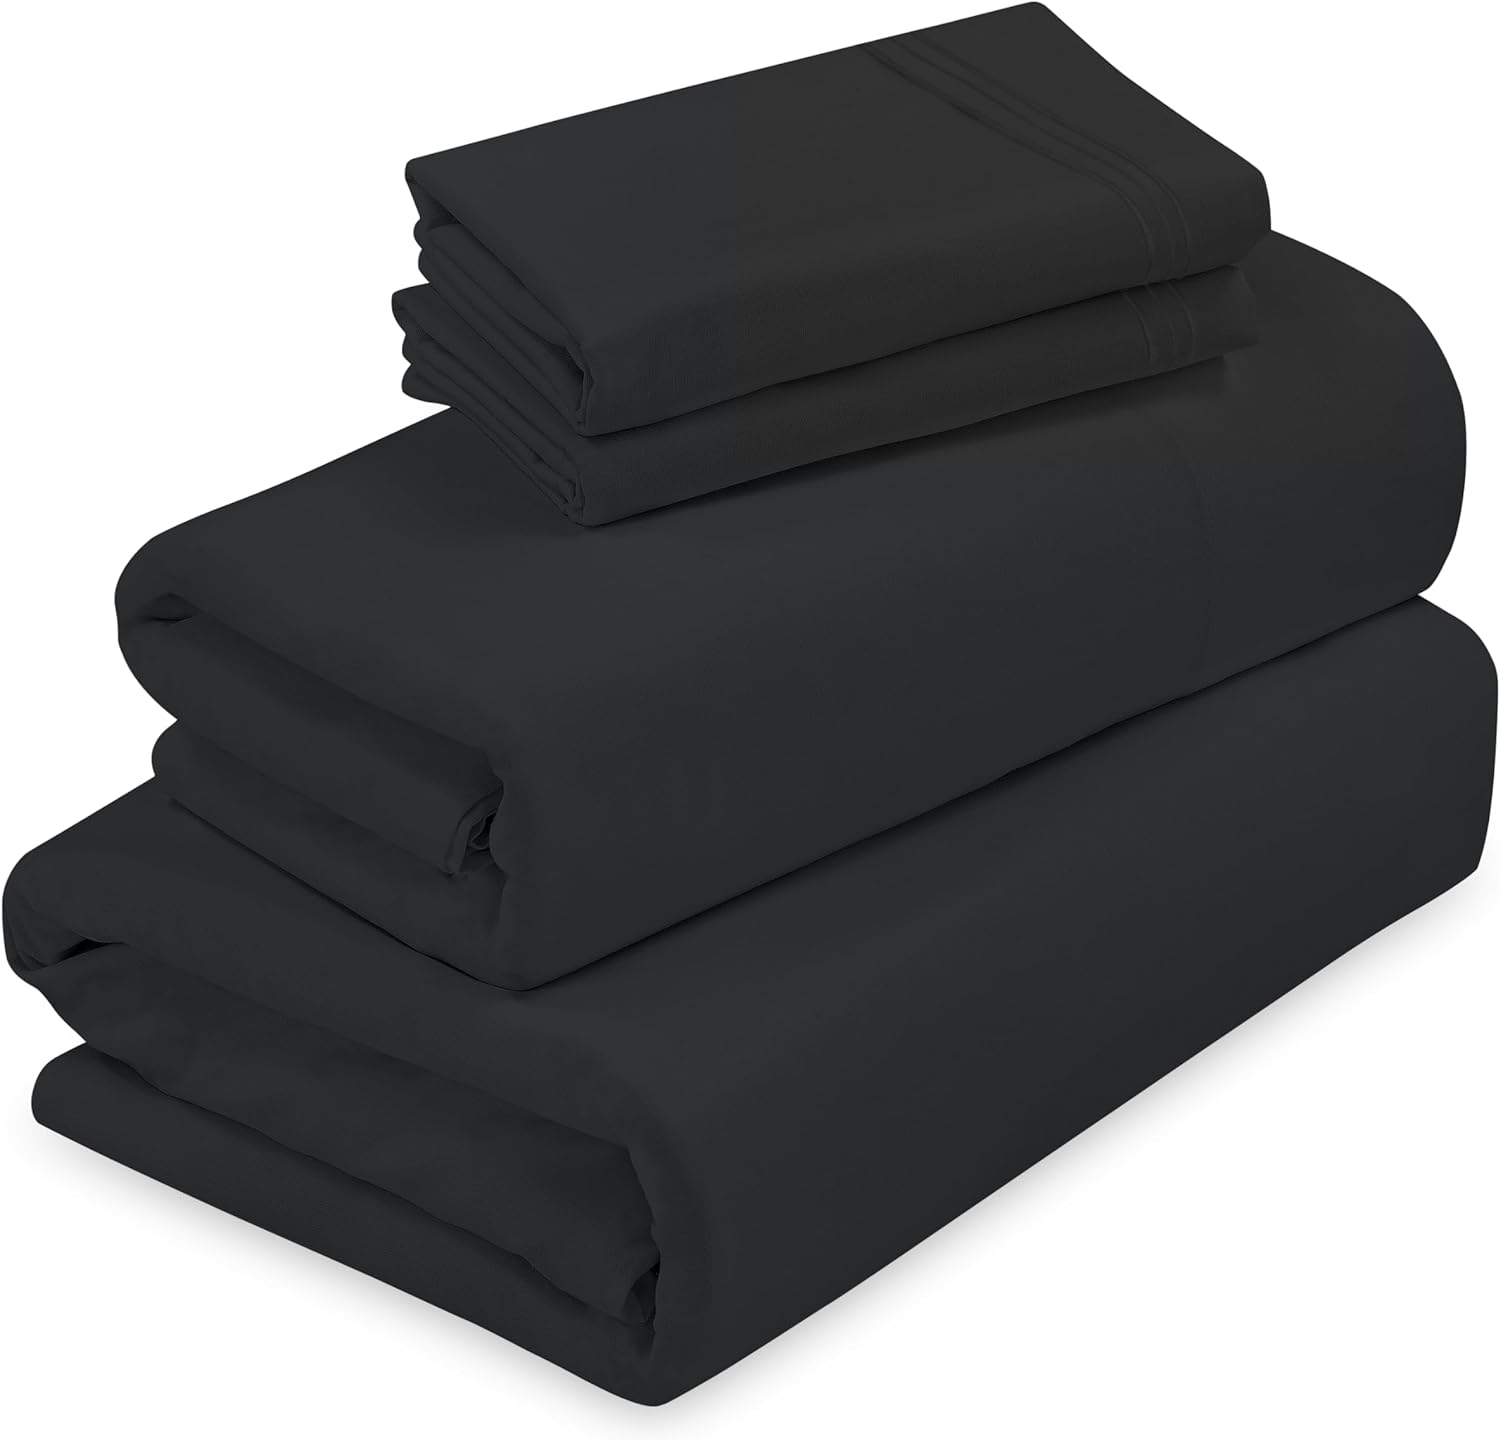 ROYALE LINENS - 4 Piece Full Bed Sheet - Soft Brushed Microfiber 1800 Bedding Set - 1 Fitted Sheet, 1 Flat Sheet, 2 Pillow Cases - Wrinkle & Fade Resistant Luxury Full Size Sheet Set (Full, Black)